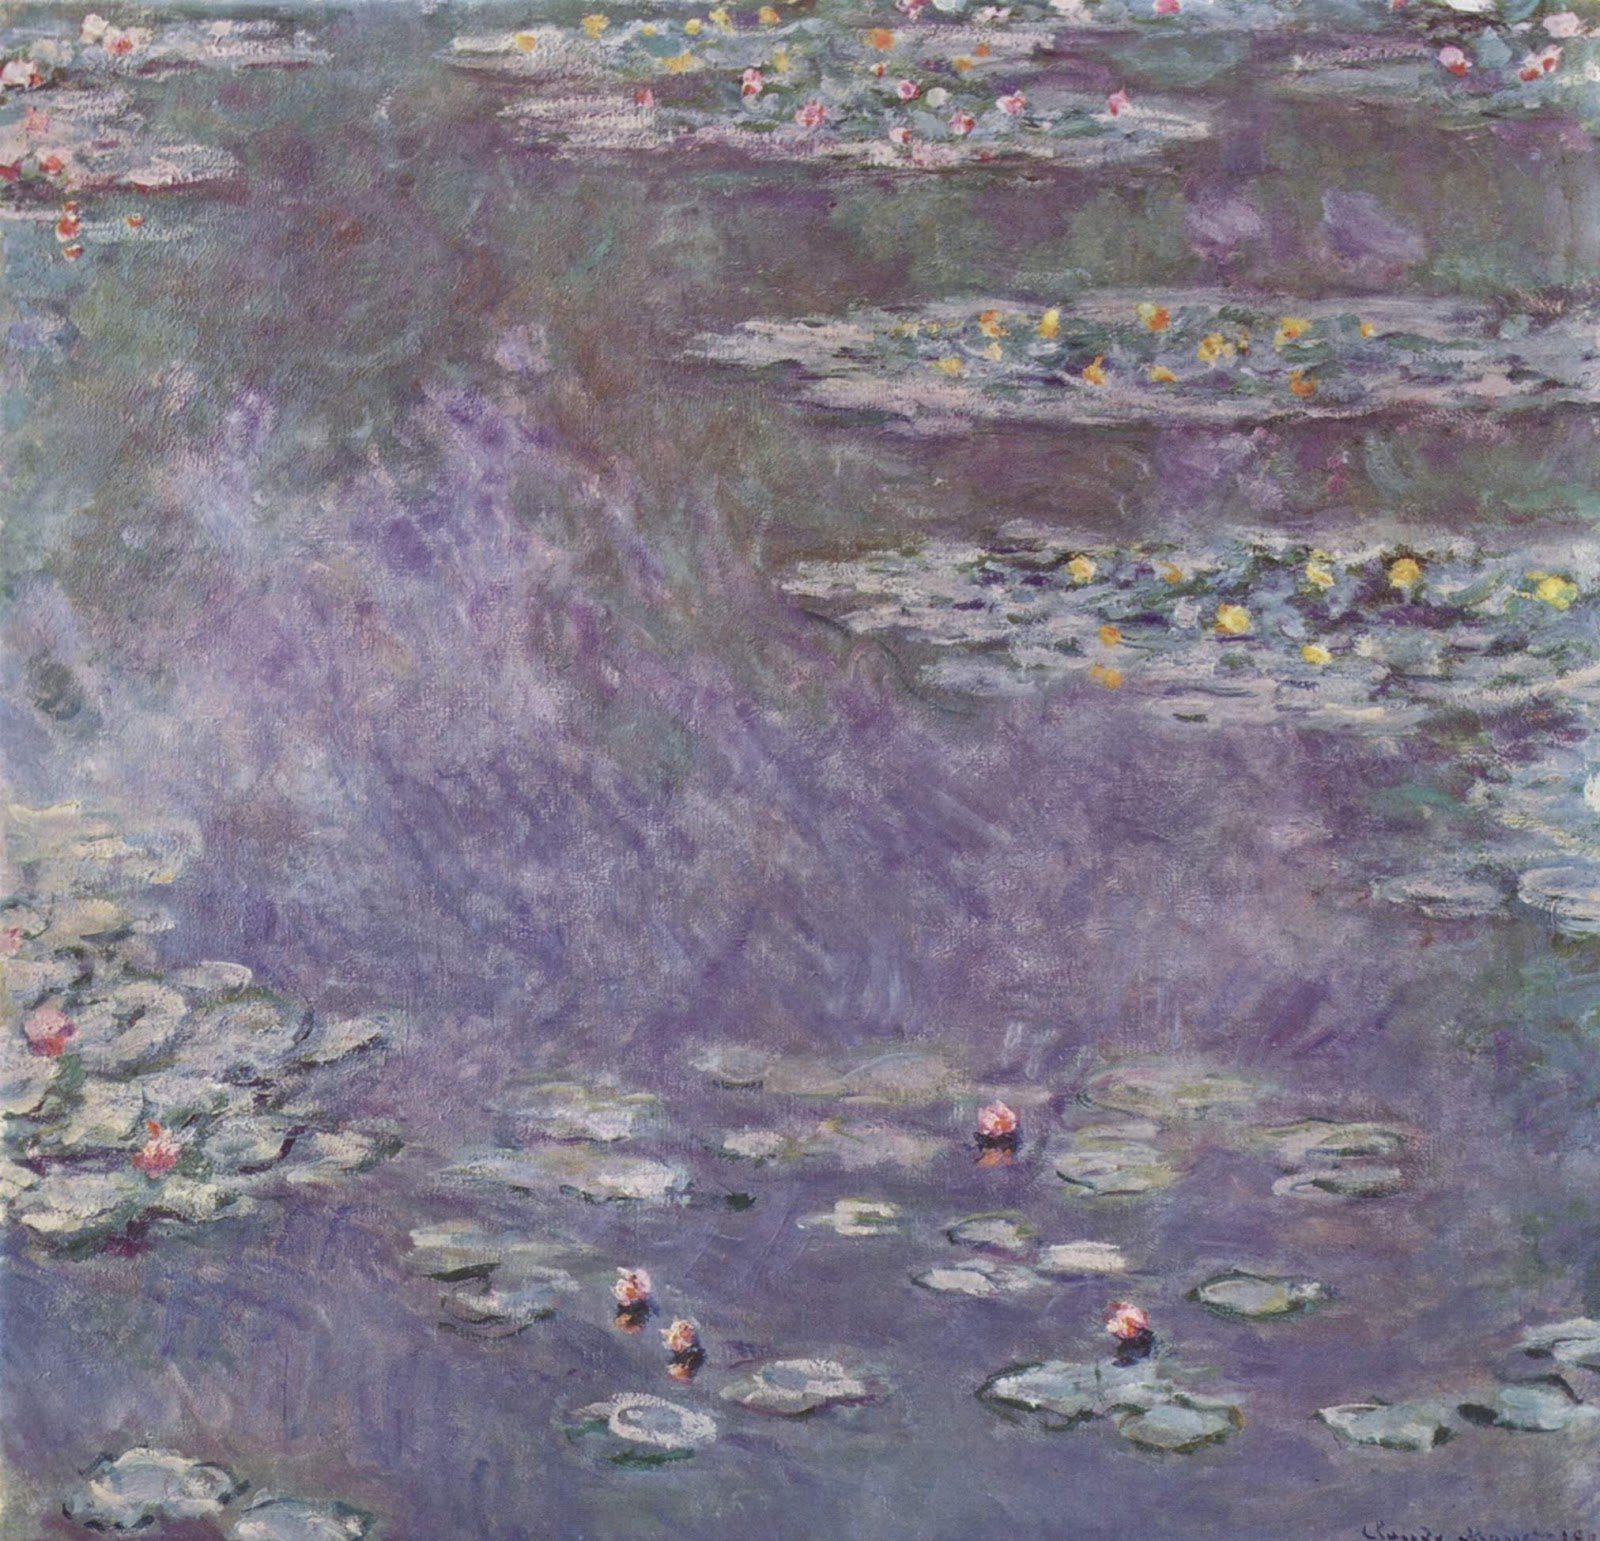 Claude+Monet-1840-1926 (1040).jpg